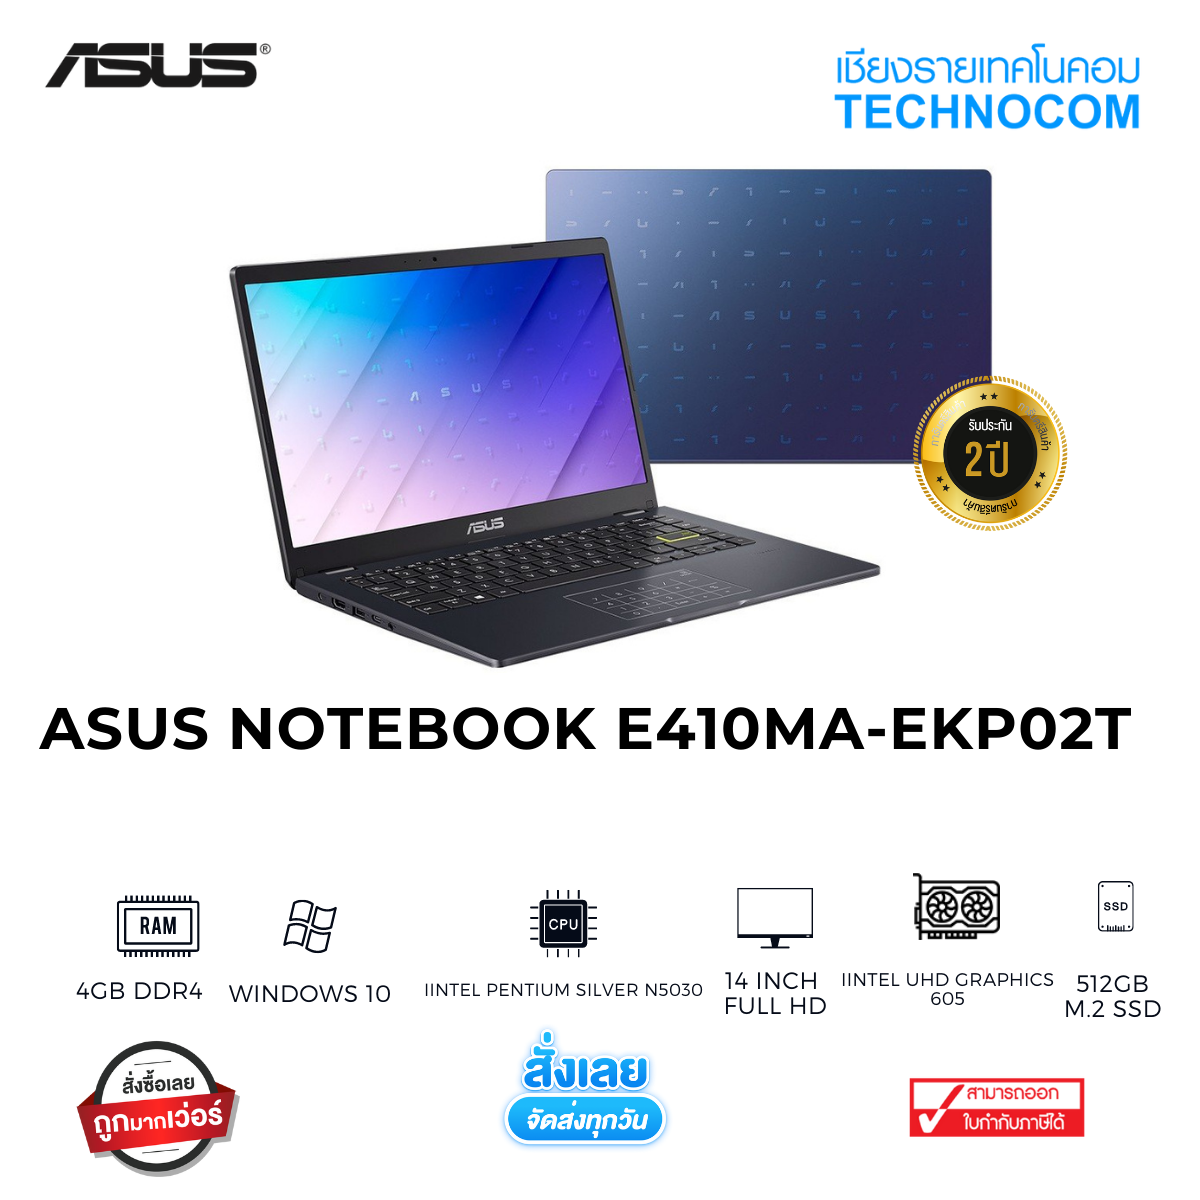 Asus Notebook E410MA-EKP02T